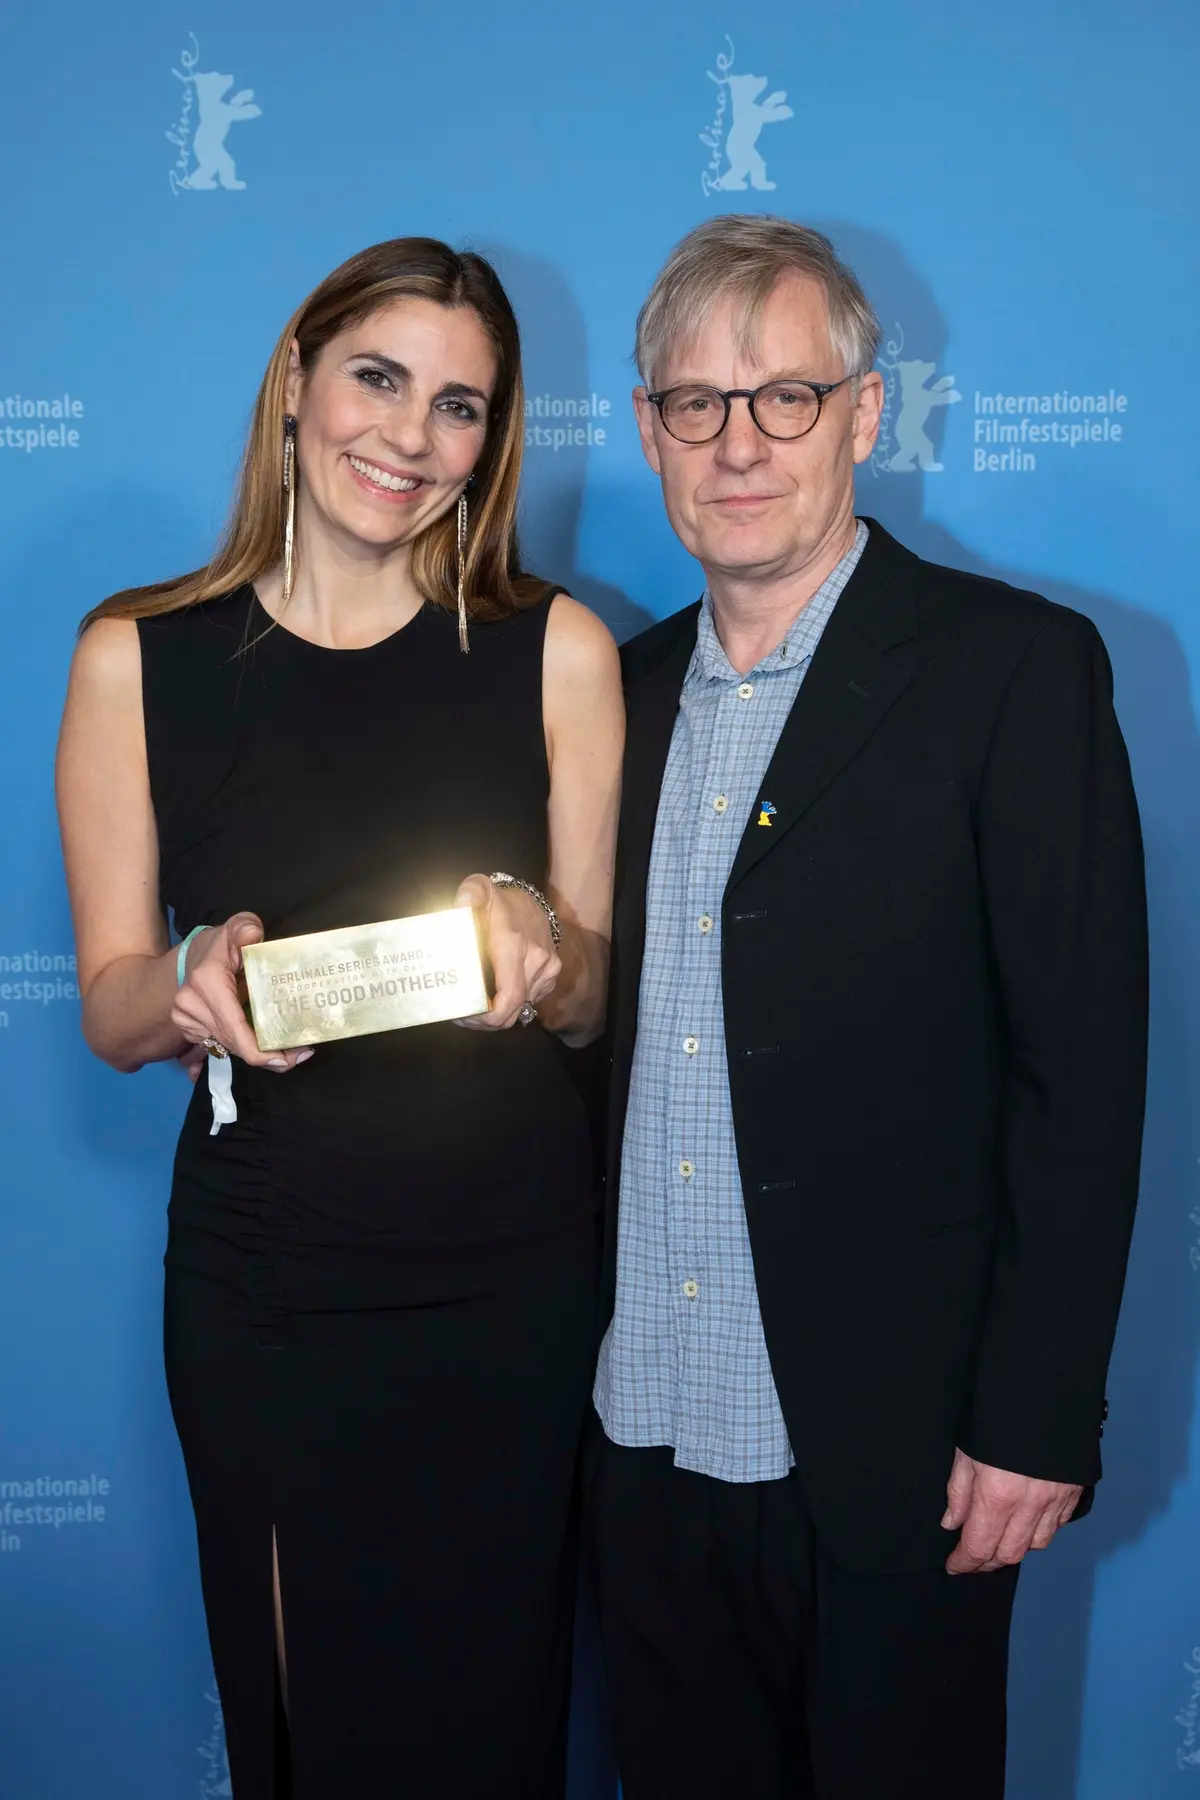 Elisa Amoruso e Julian Jarrold con il premio della Berlinale 73